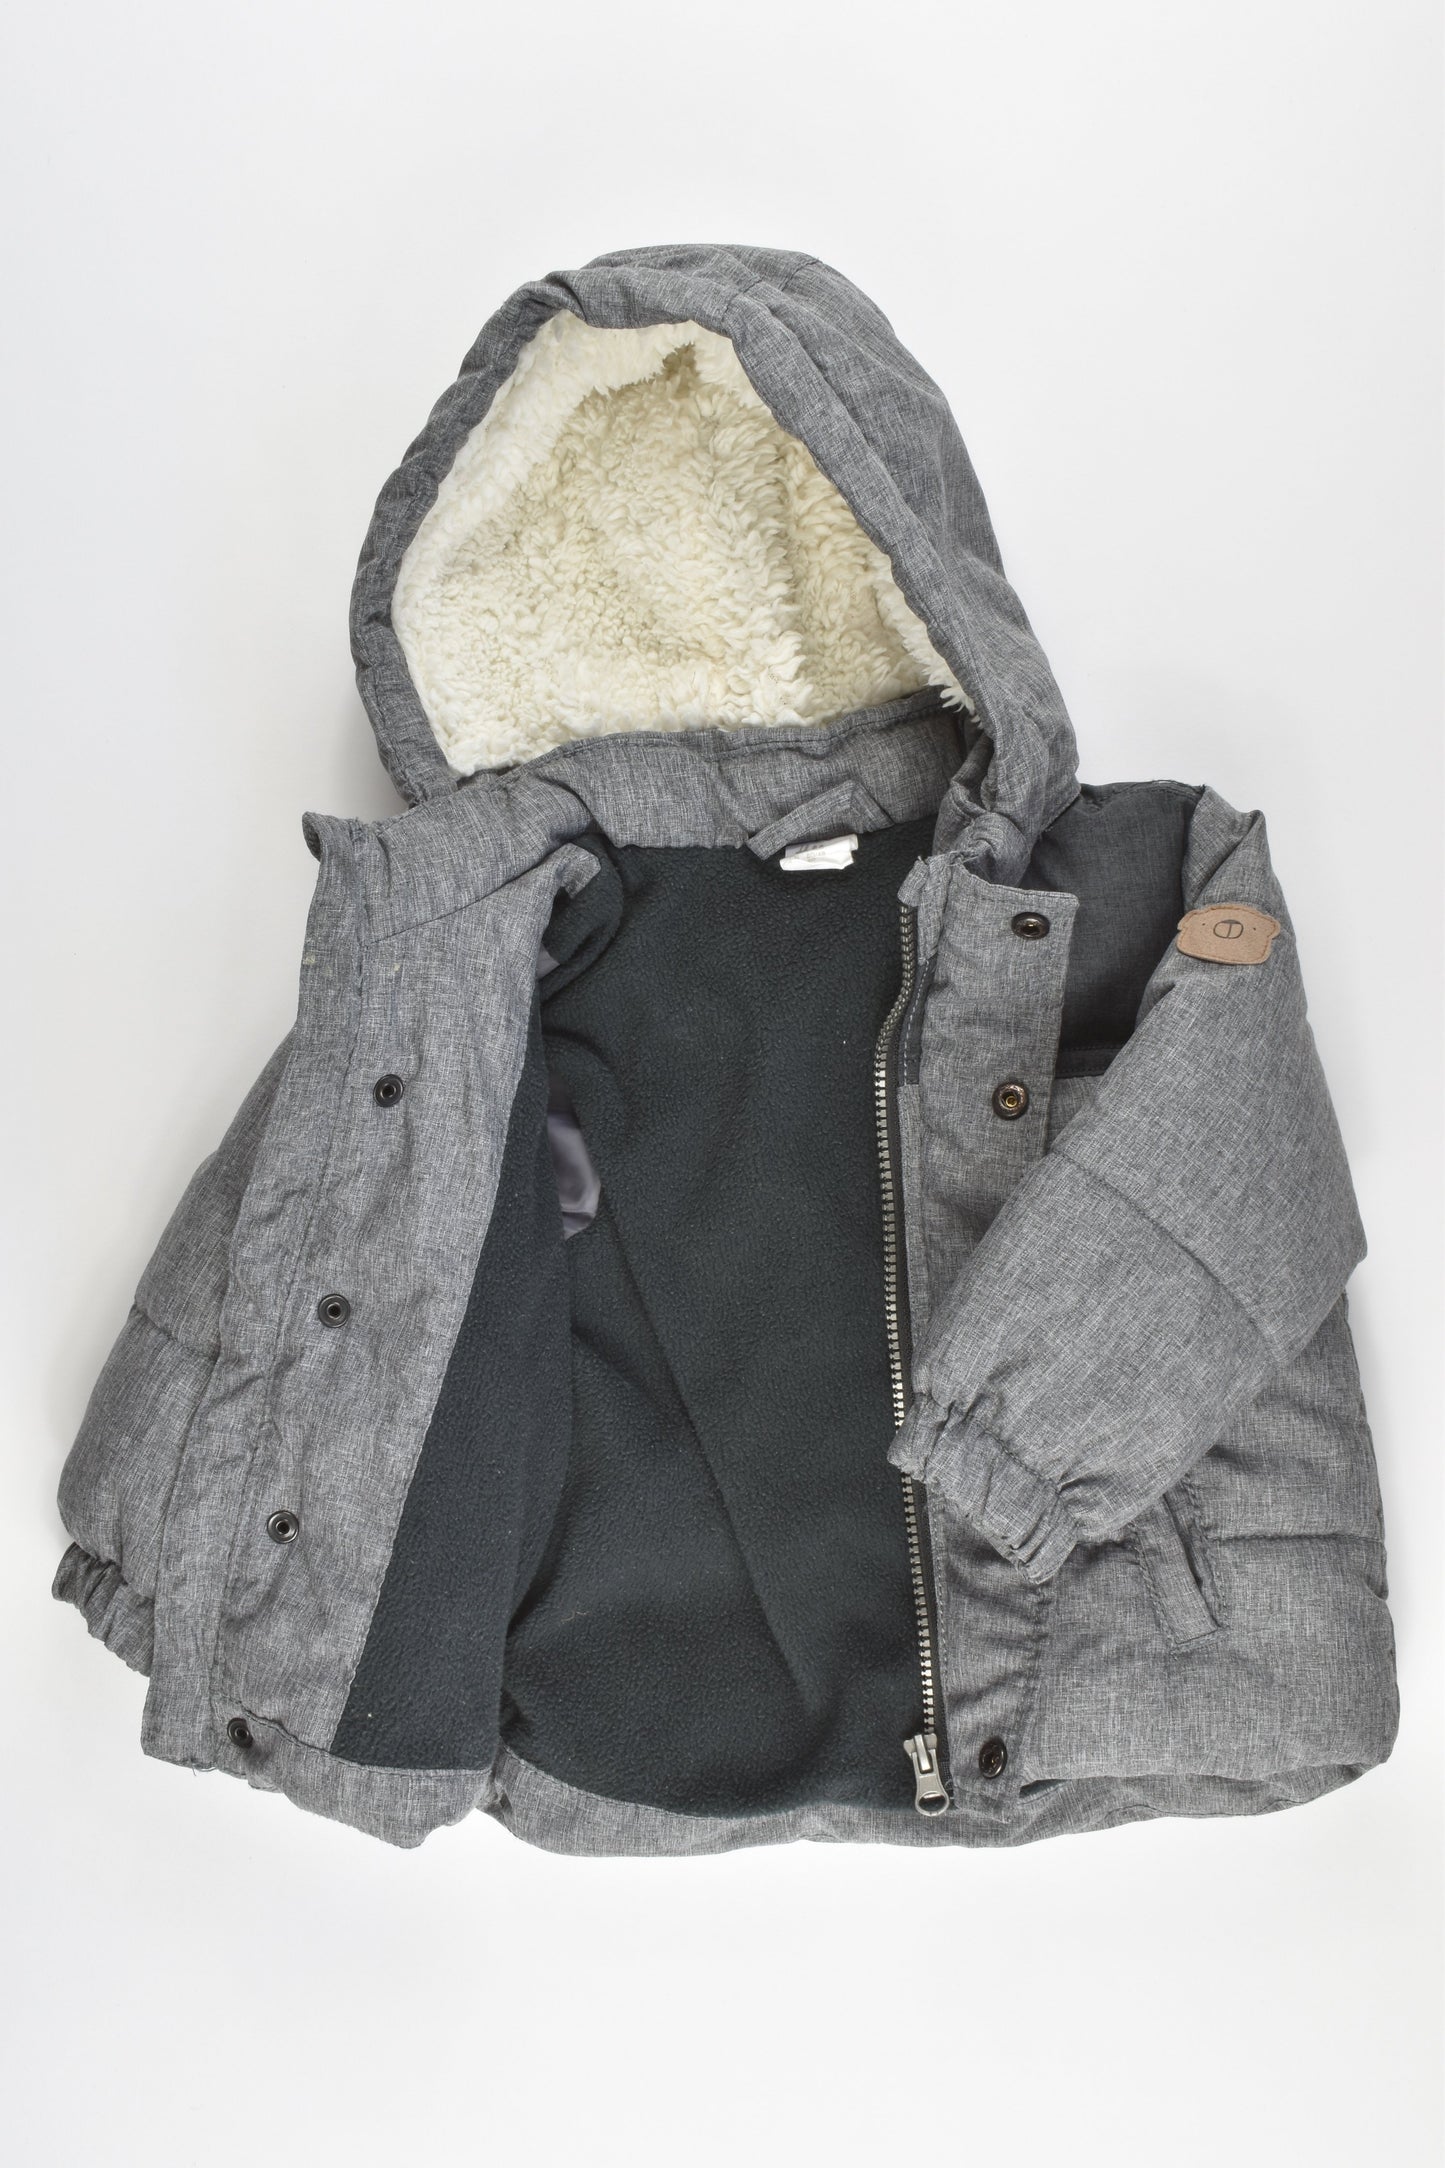 H&M Size 1 Winter jacket